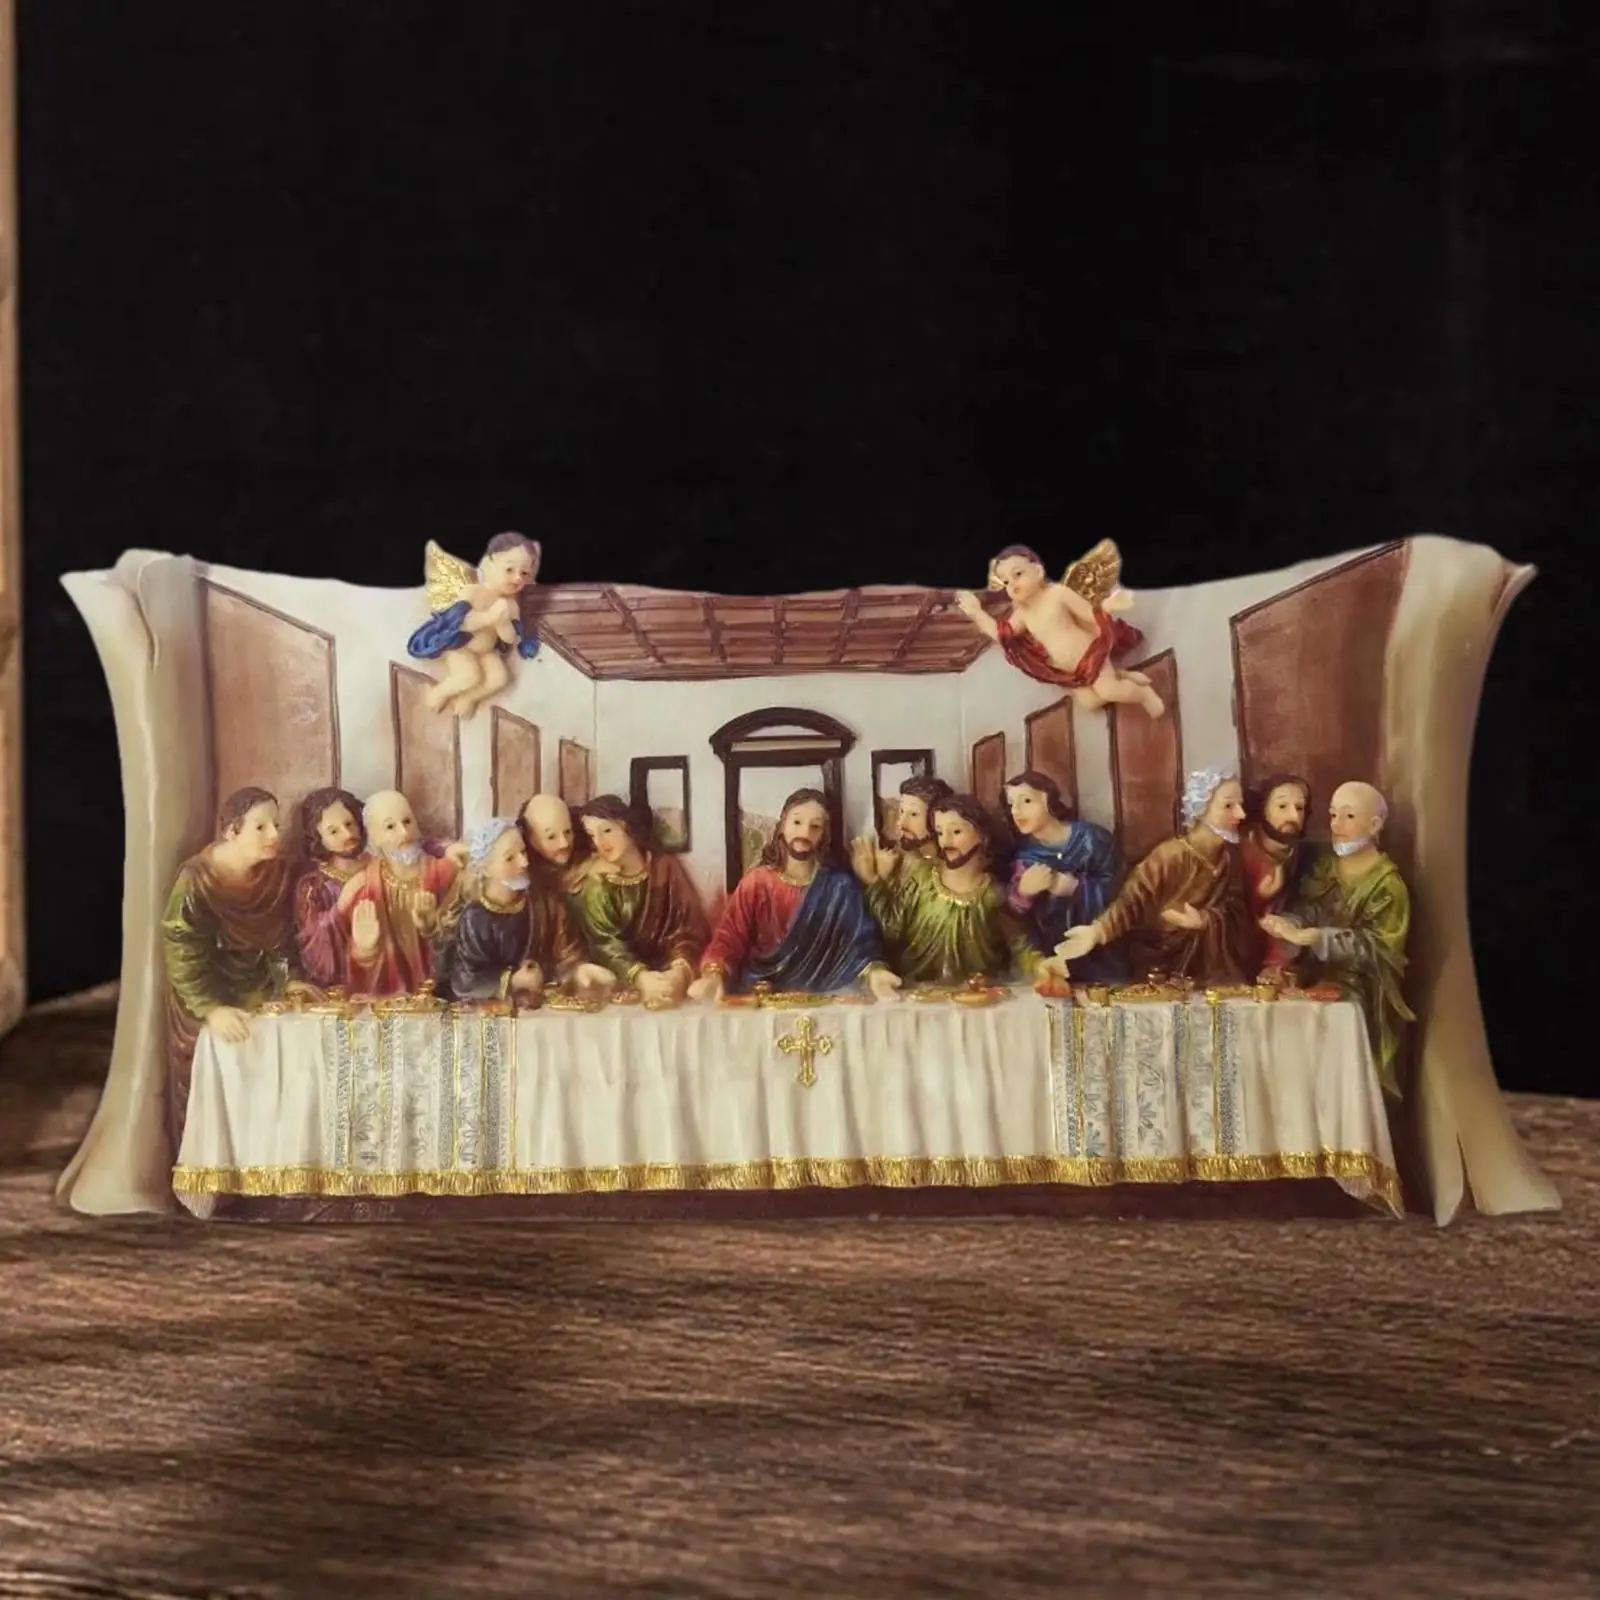 Divine Last Supper Sculpture: Contemporary Religious Artwork for Home Decor